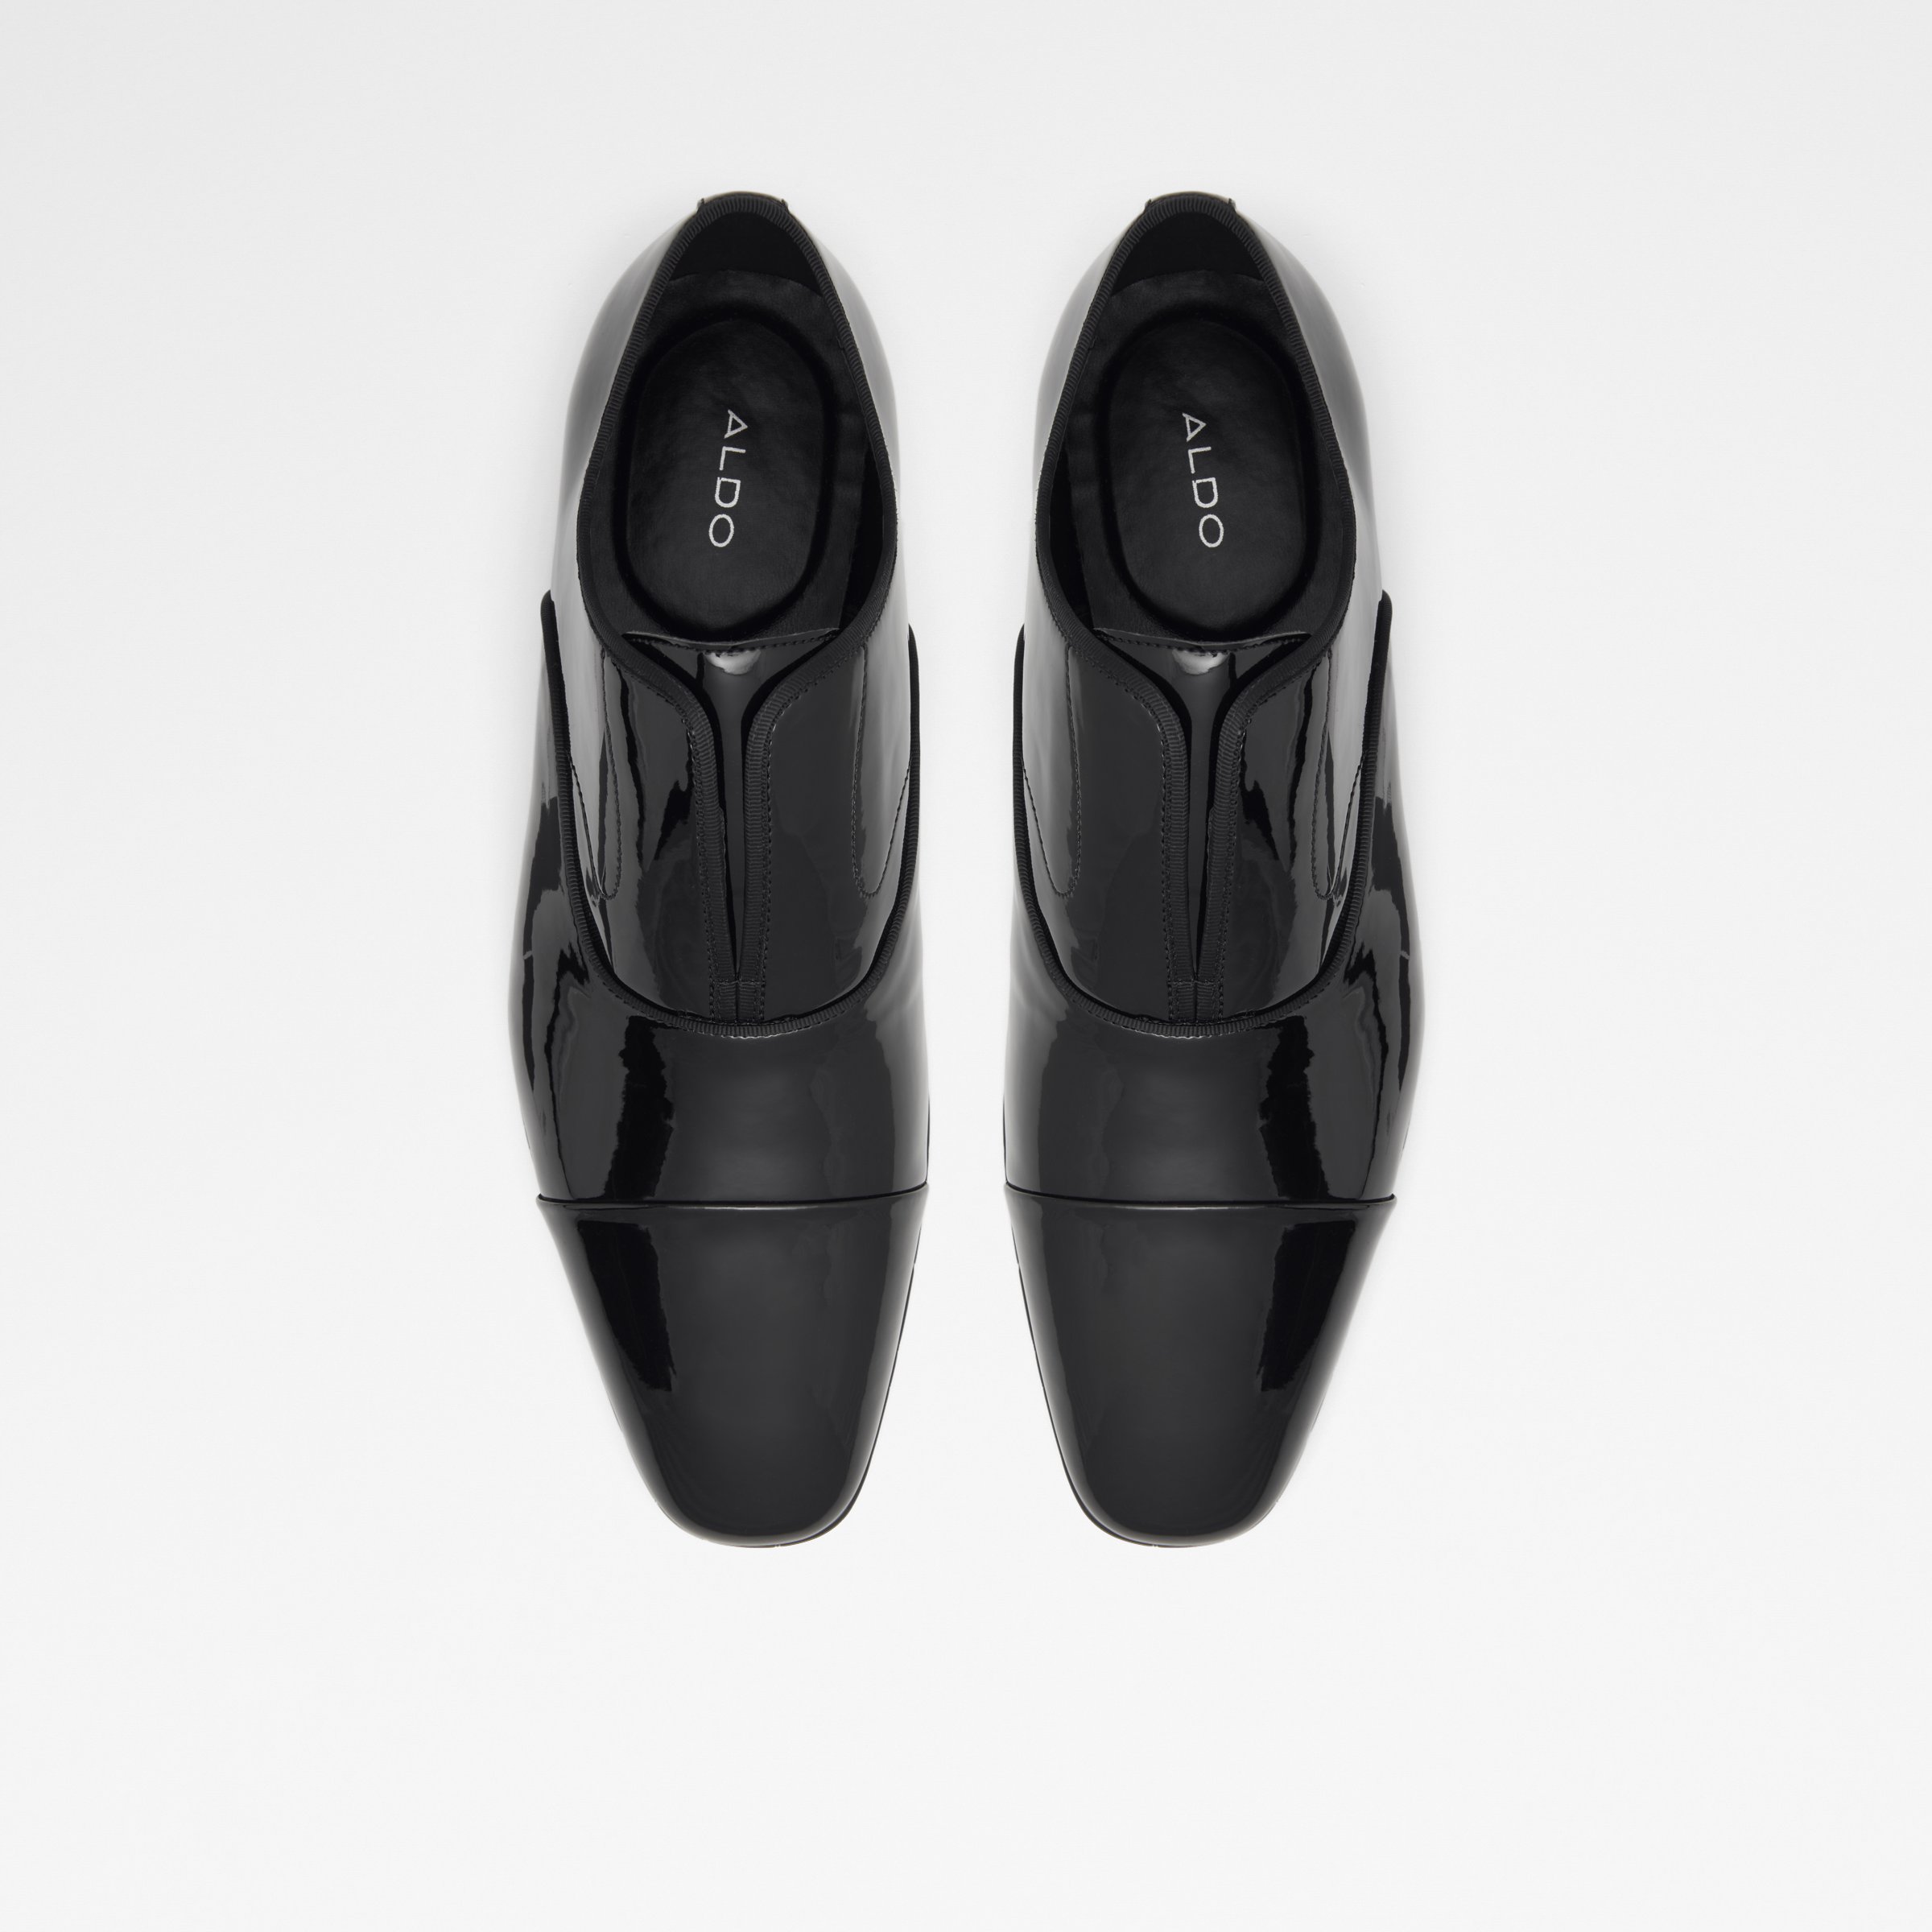 Bolivar Black Synthetic Men's Dress Shoes | ALDO US